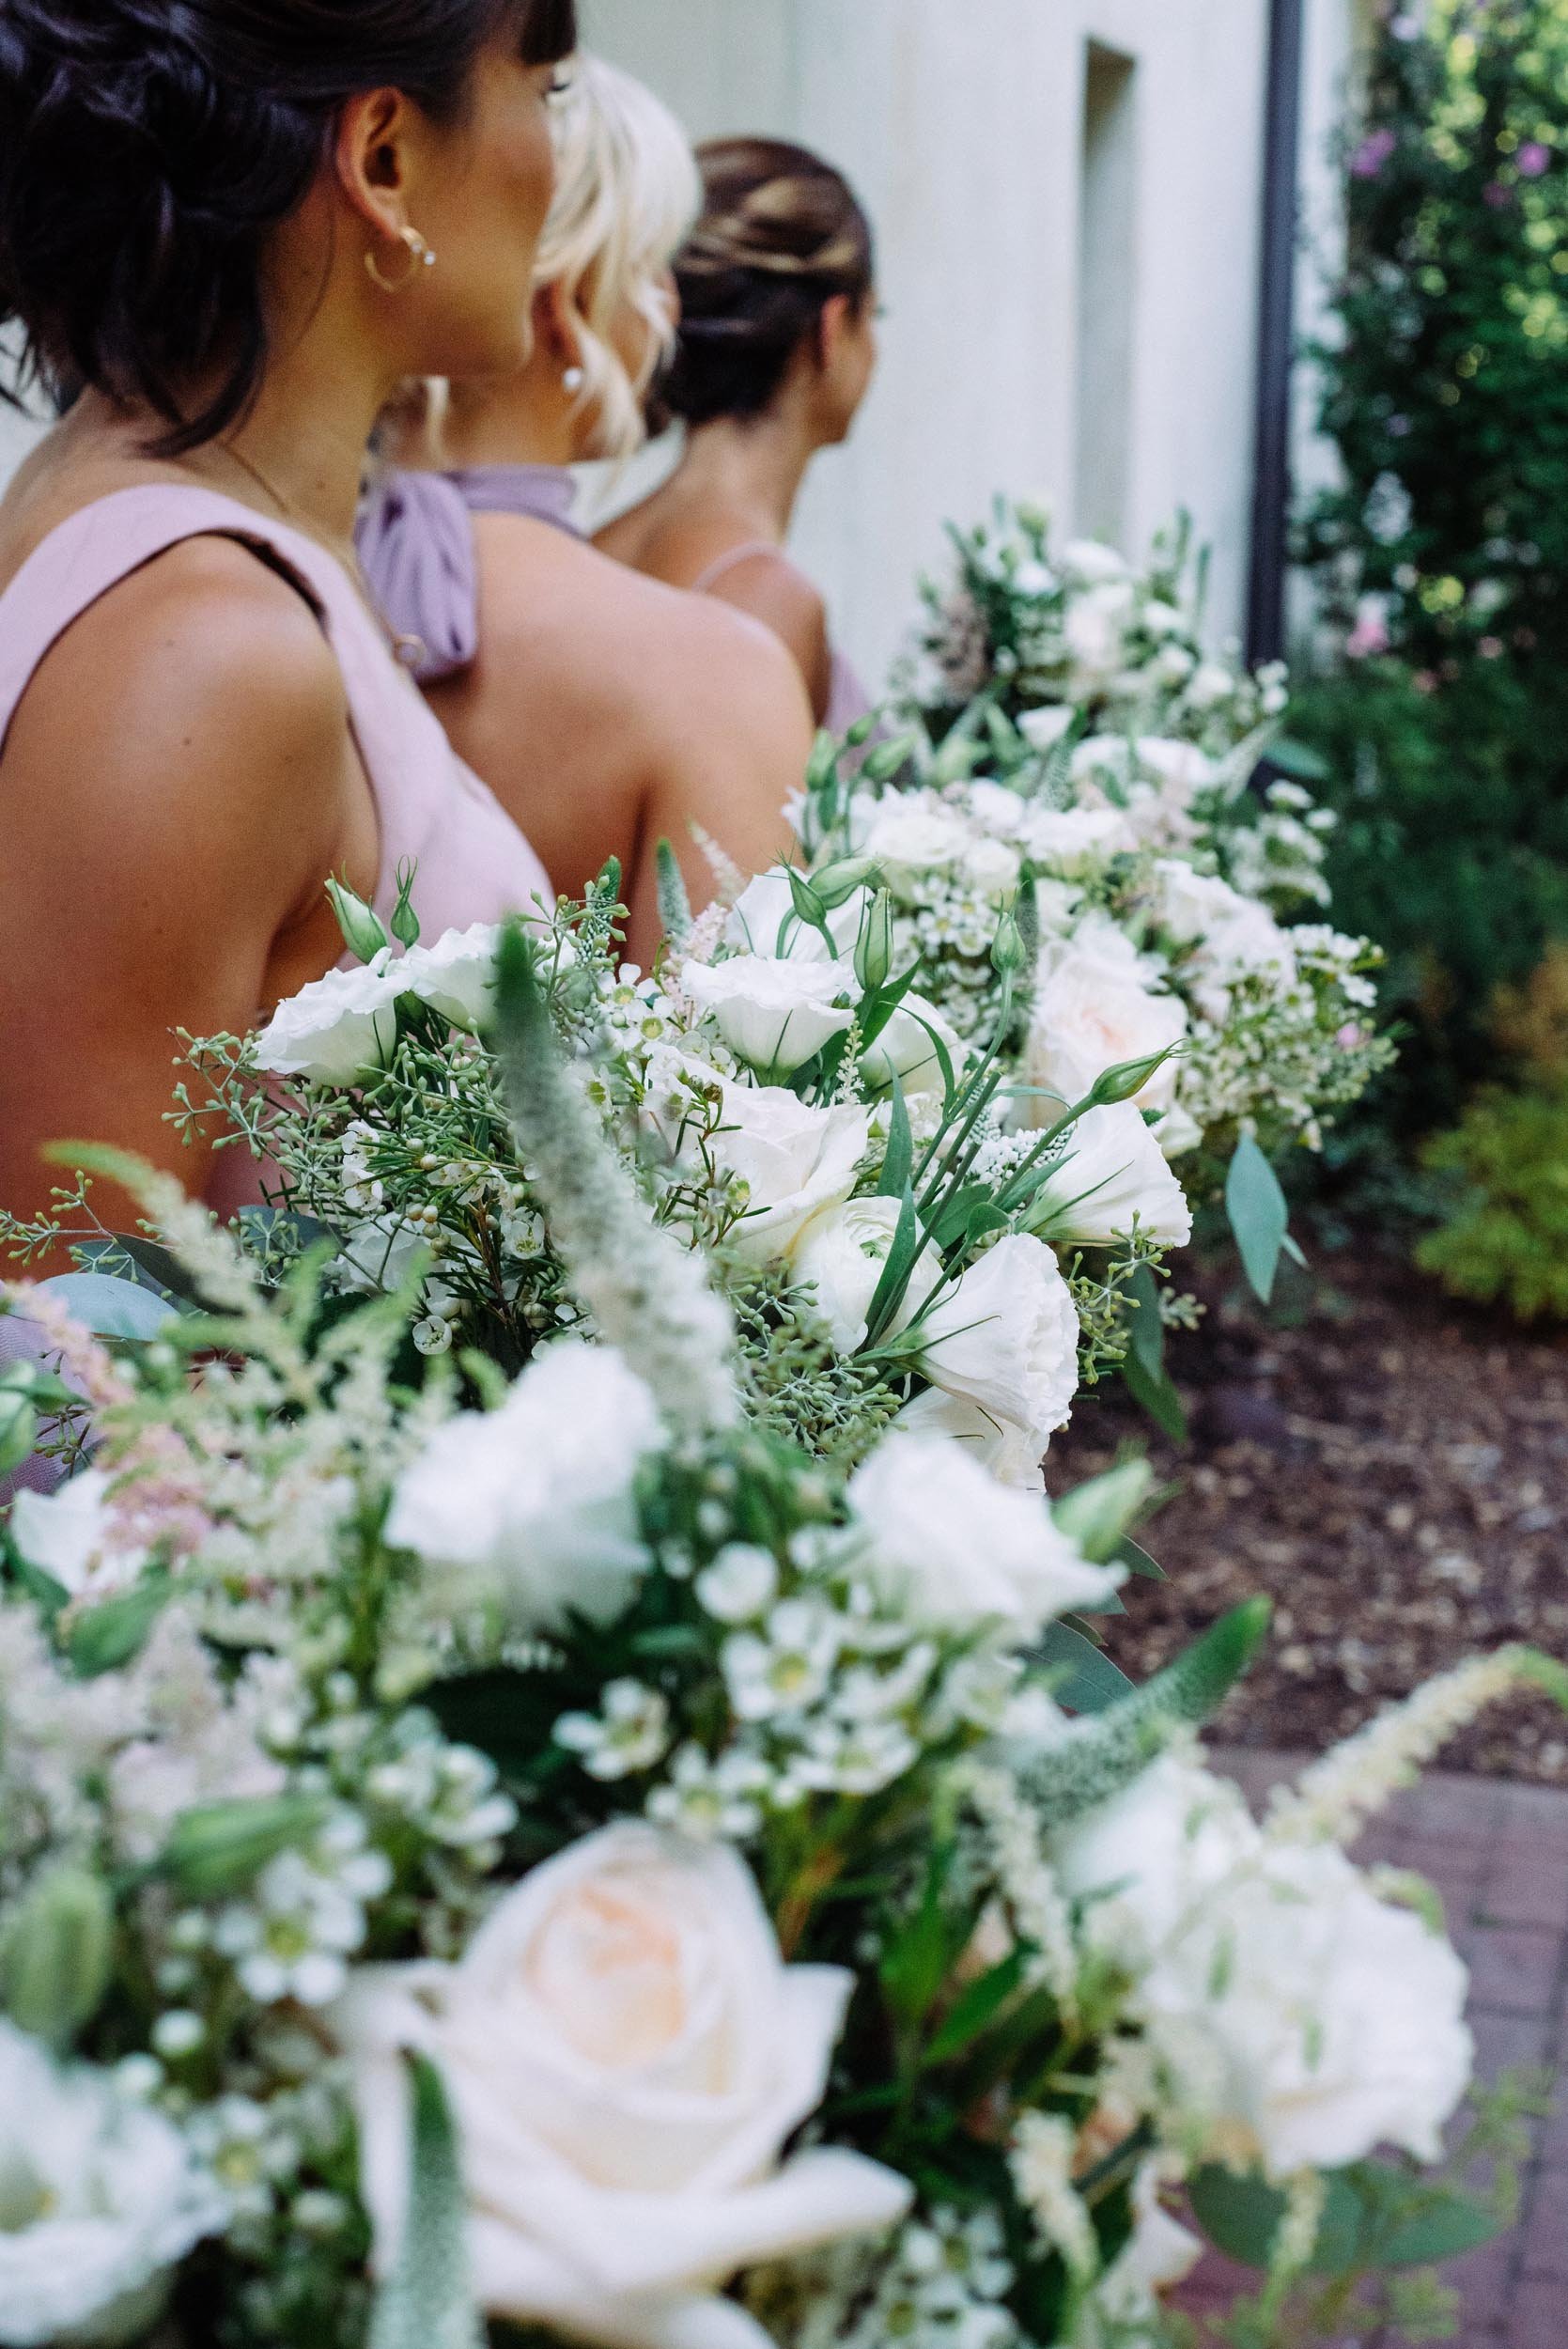 hengstenbergs-florist-weddings-love-story-marisa-nick-©BorisZaretskyPhotography-008.jpg